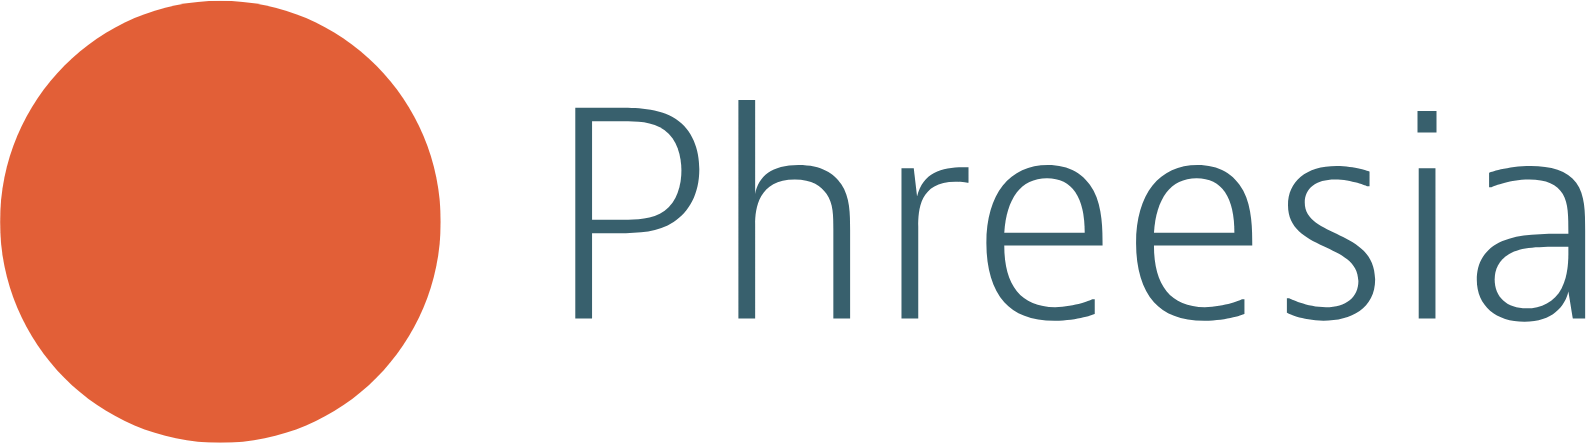 Phreesia logo large (transparent PNG)